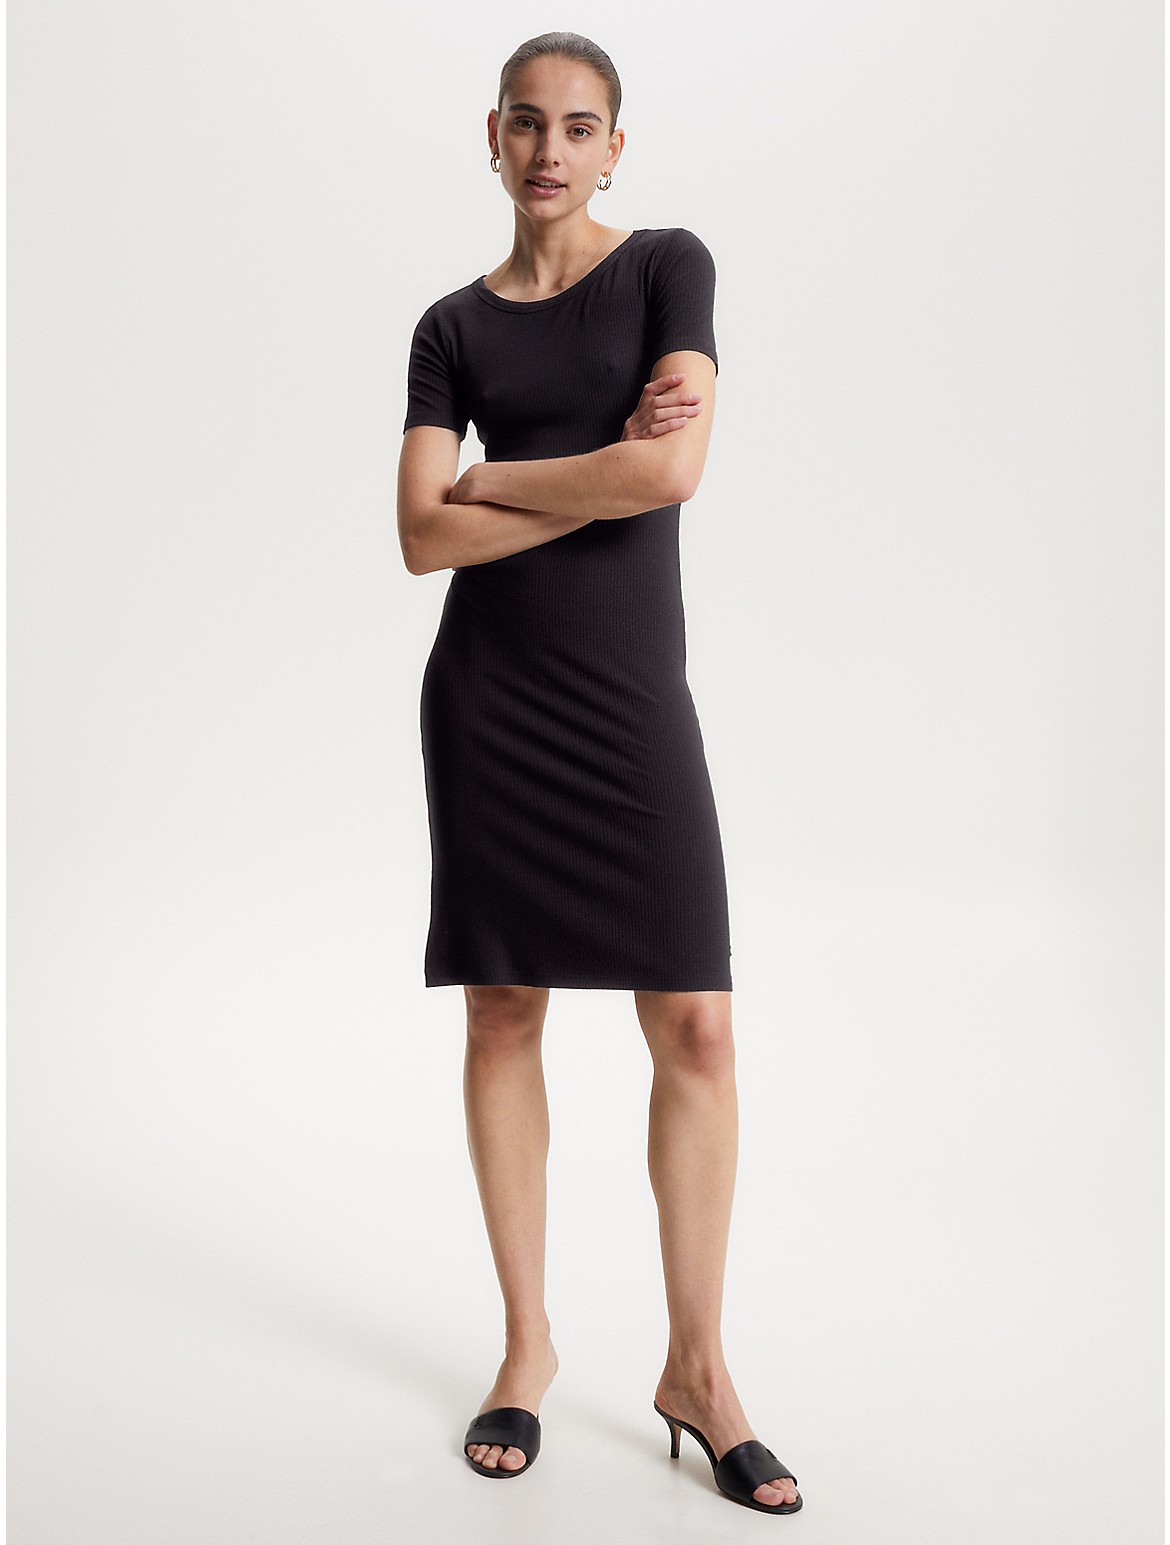 Tommy Hilfiger Women's Slim Fit Ribbed Short-Sleeve Dress - Black - XS